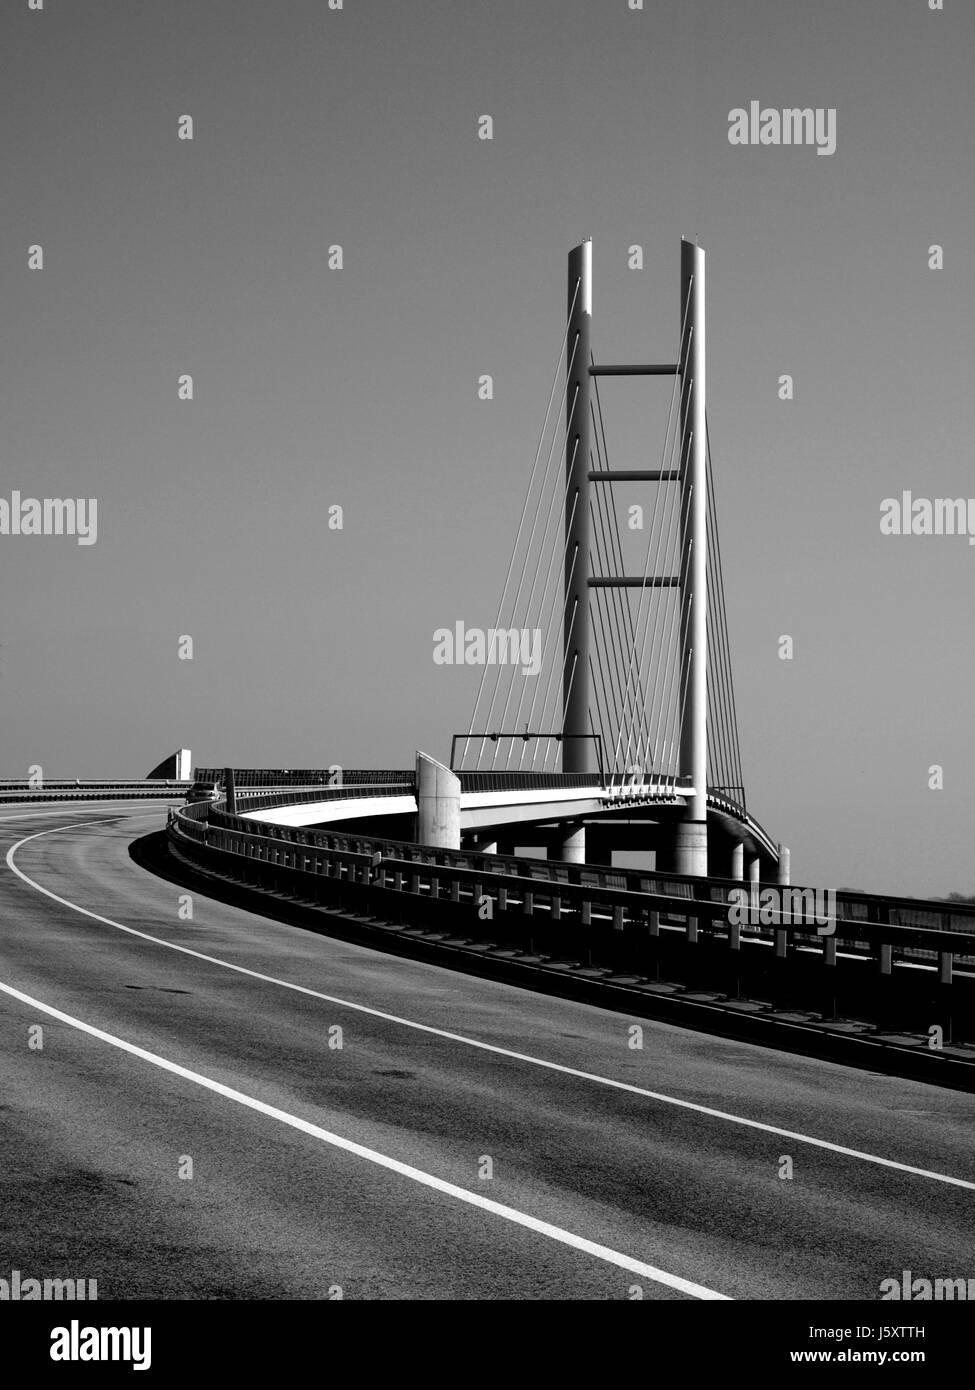 reprimand bridge Stock Photo